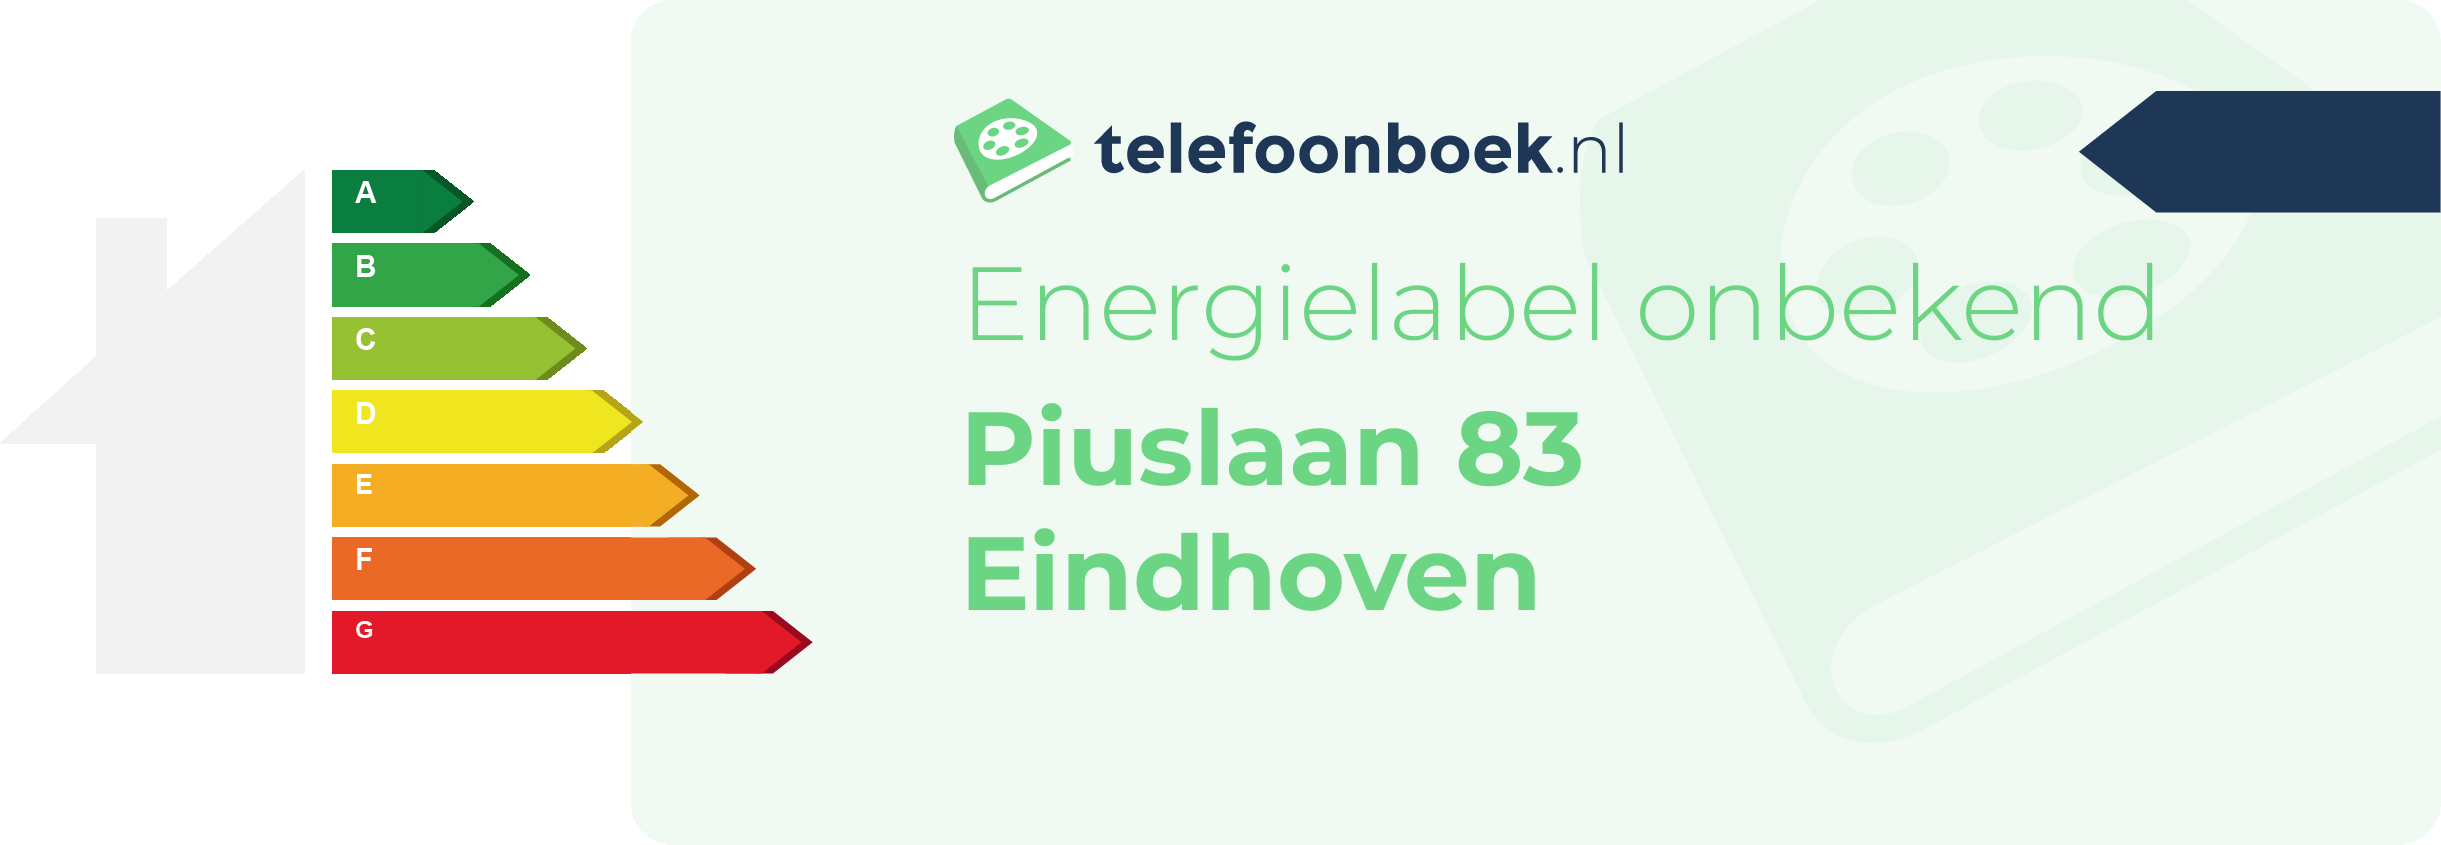 Energielabel Piuslaan 83 Eindhoven